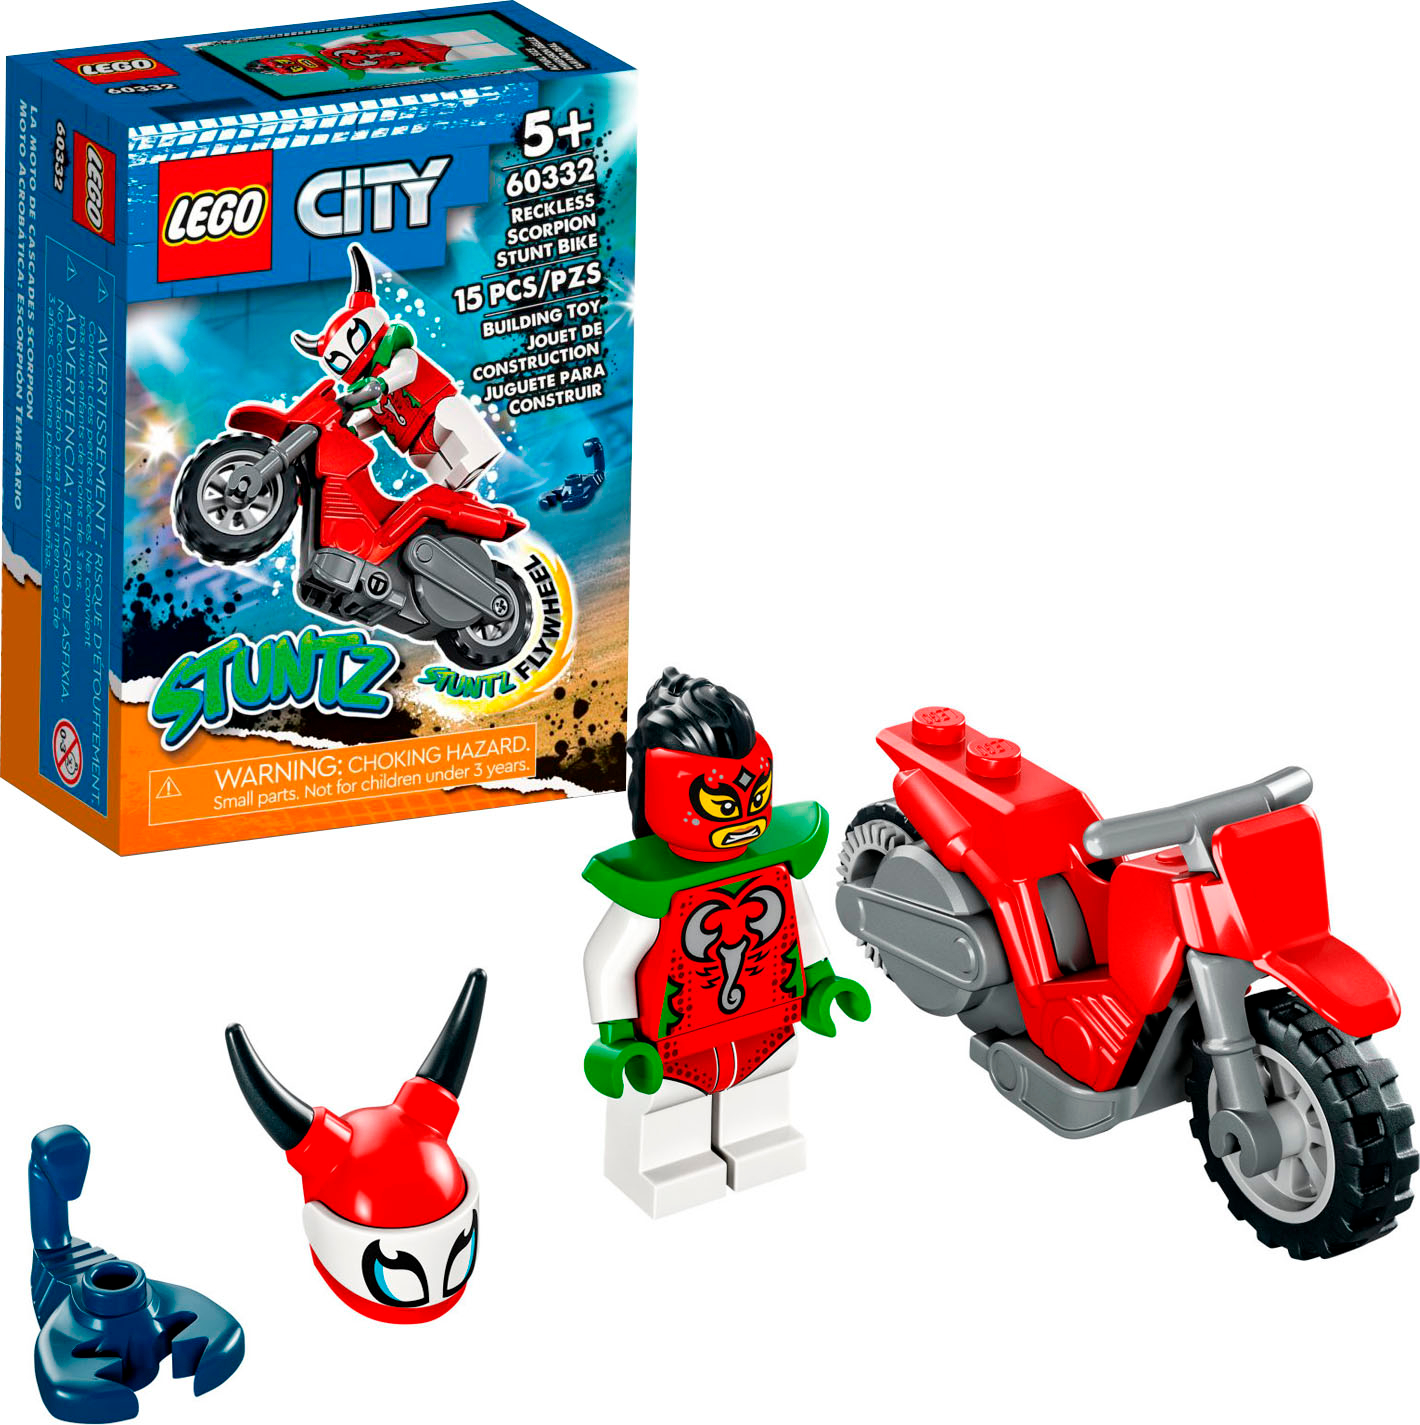 Clancy spreiding Arbitrage LEGO City Reckless Scorpion Stunt Bike 60332 6379640 - Best Buy